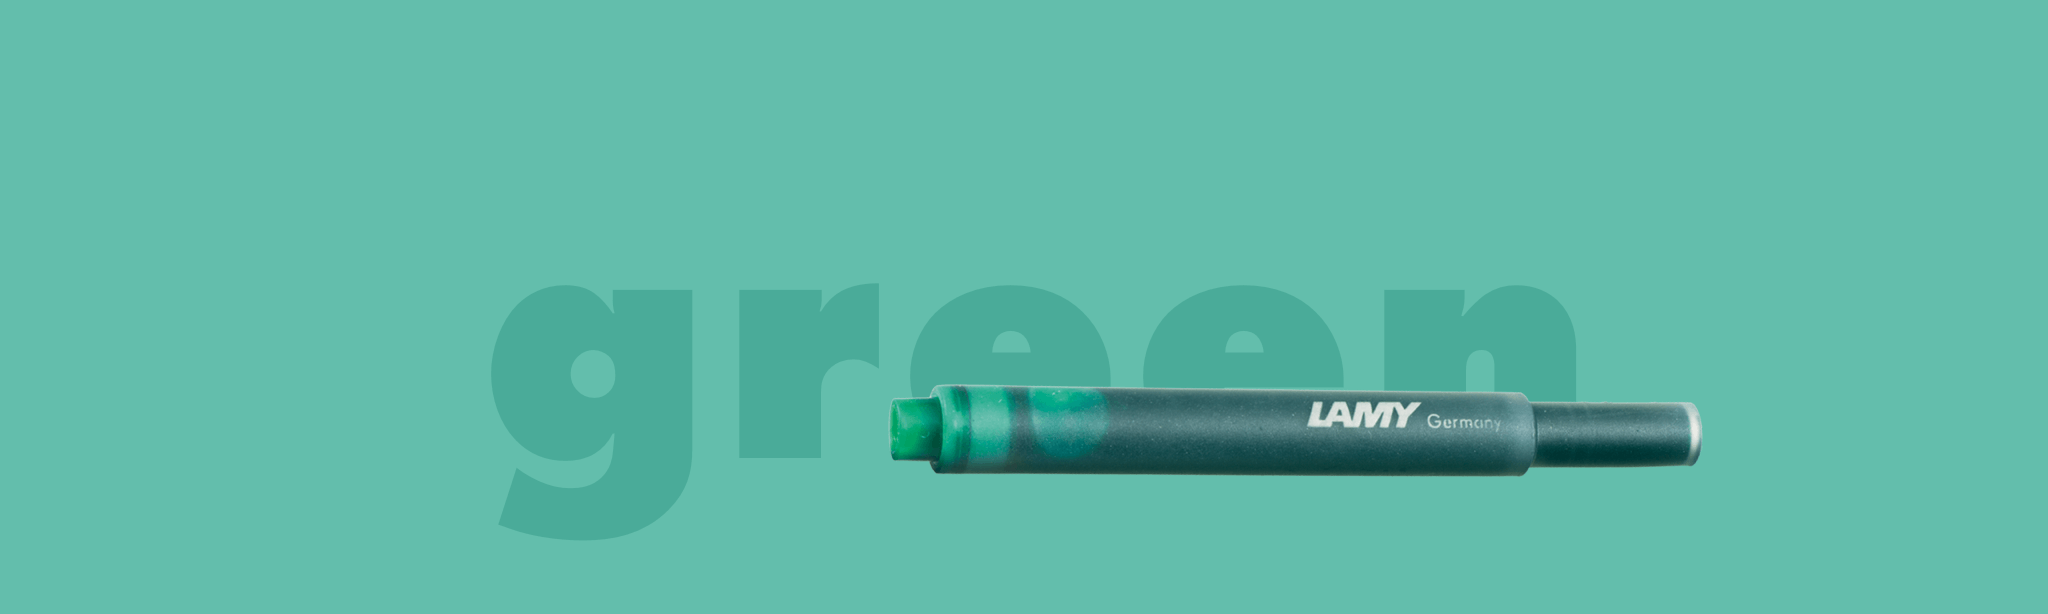 Lamy Ink Cartridges for Fountain Pen